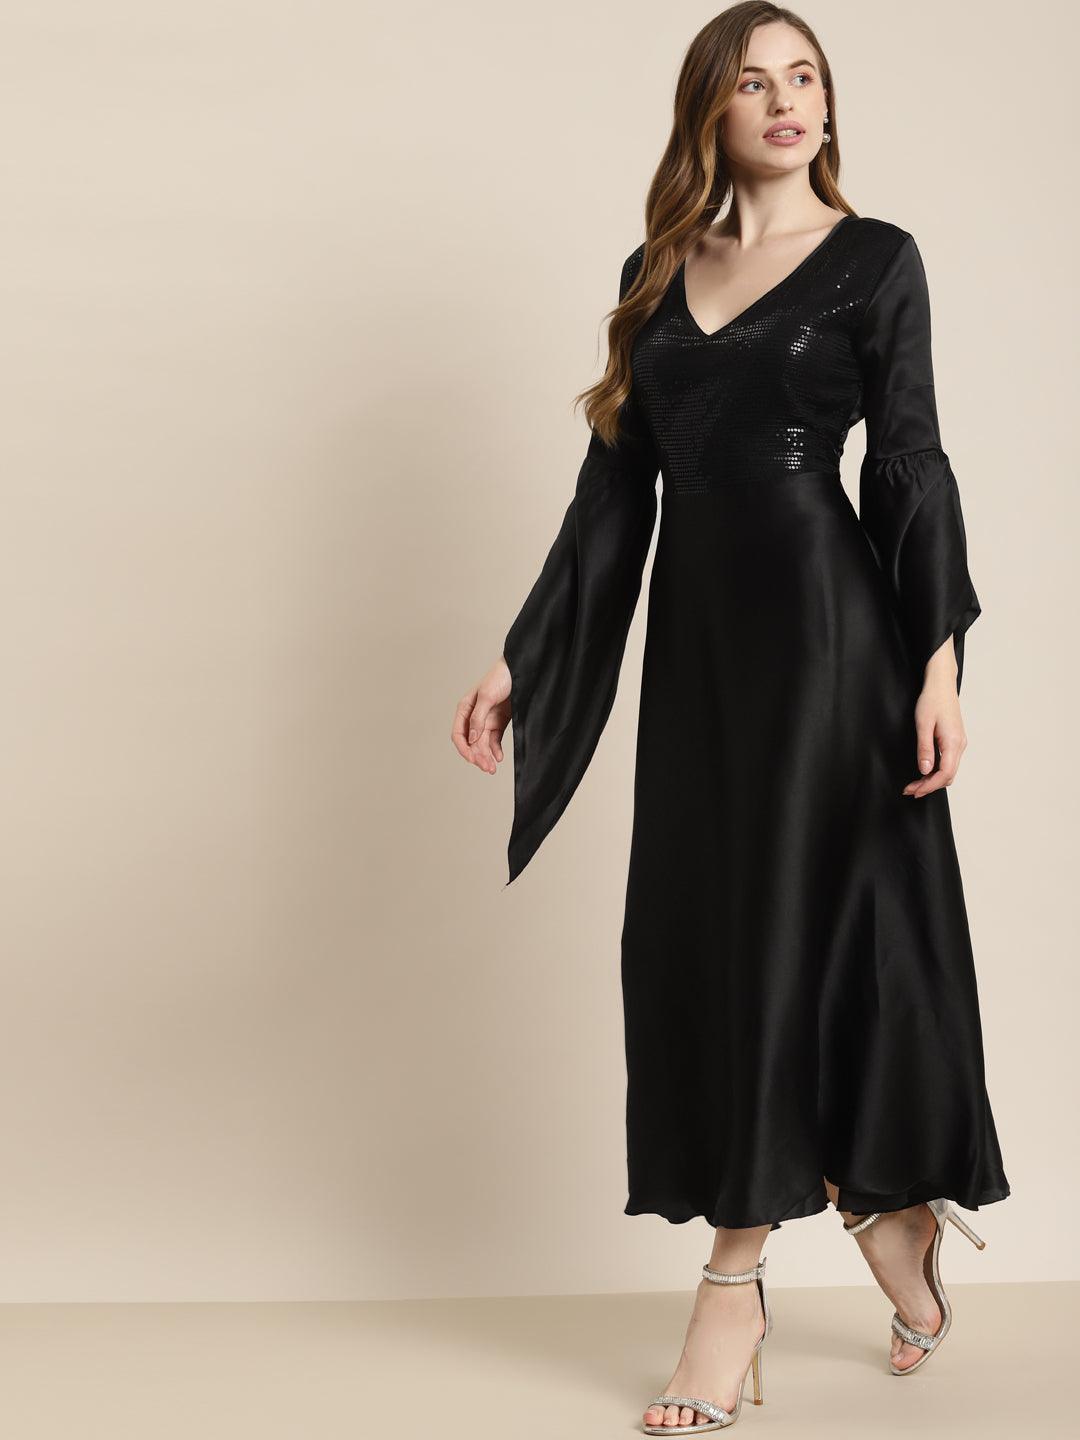 Qurvii Black satin party dress - Qurvii India